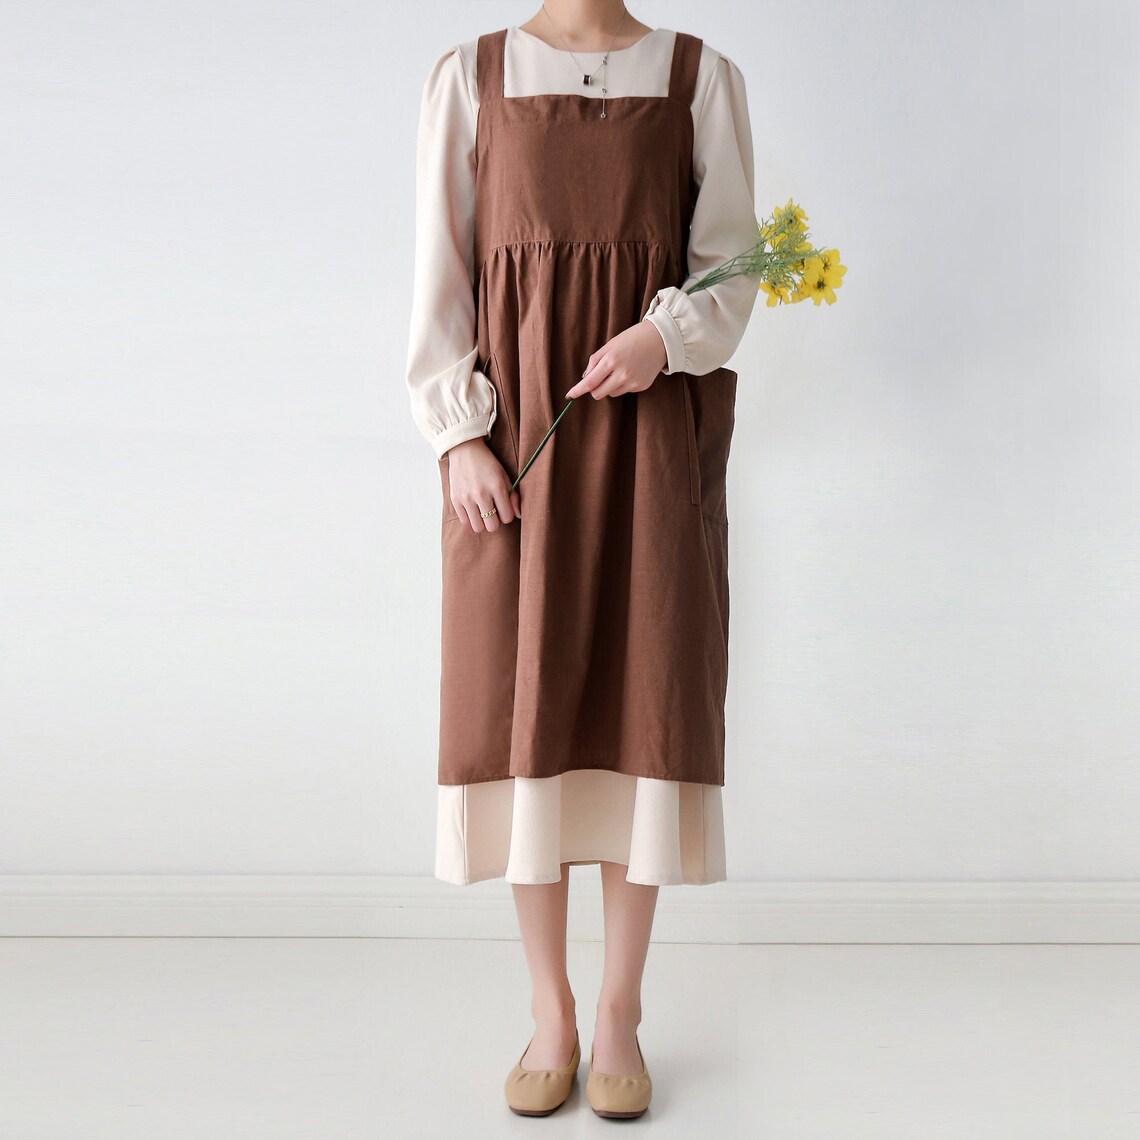 Linen apron dress adjustable linen cotton apron with pockets | Etsy